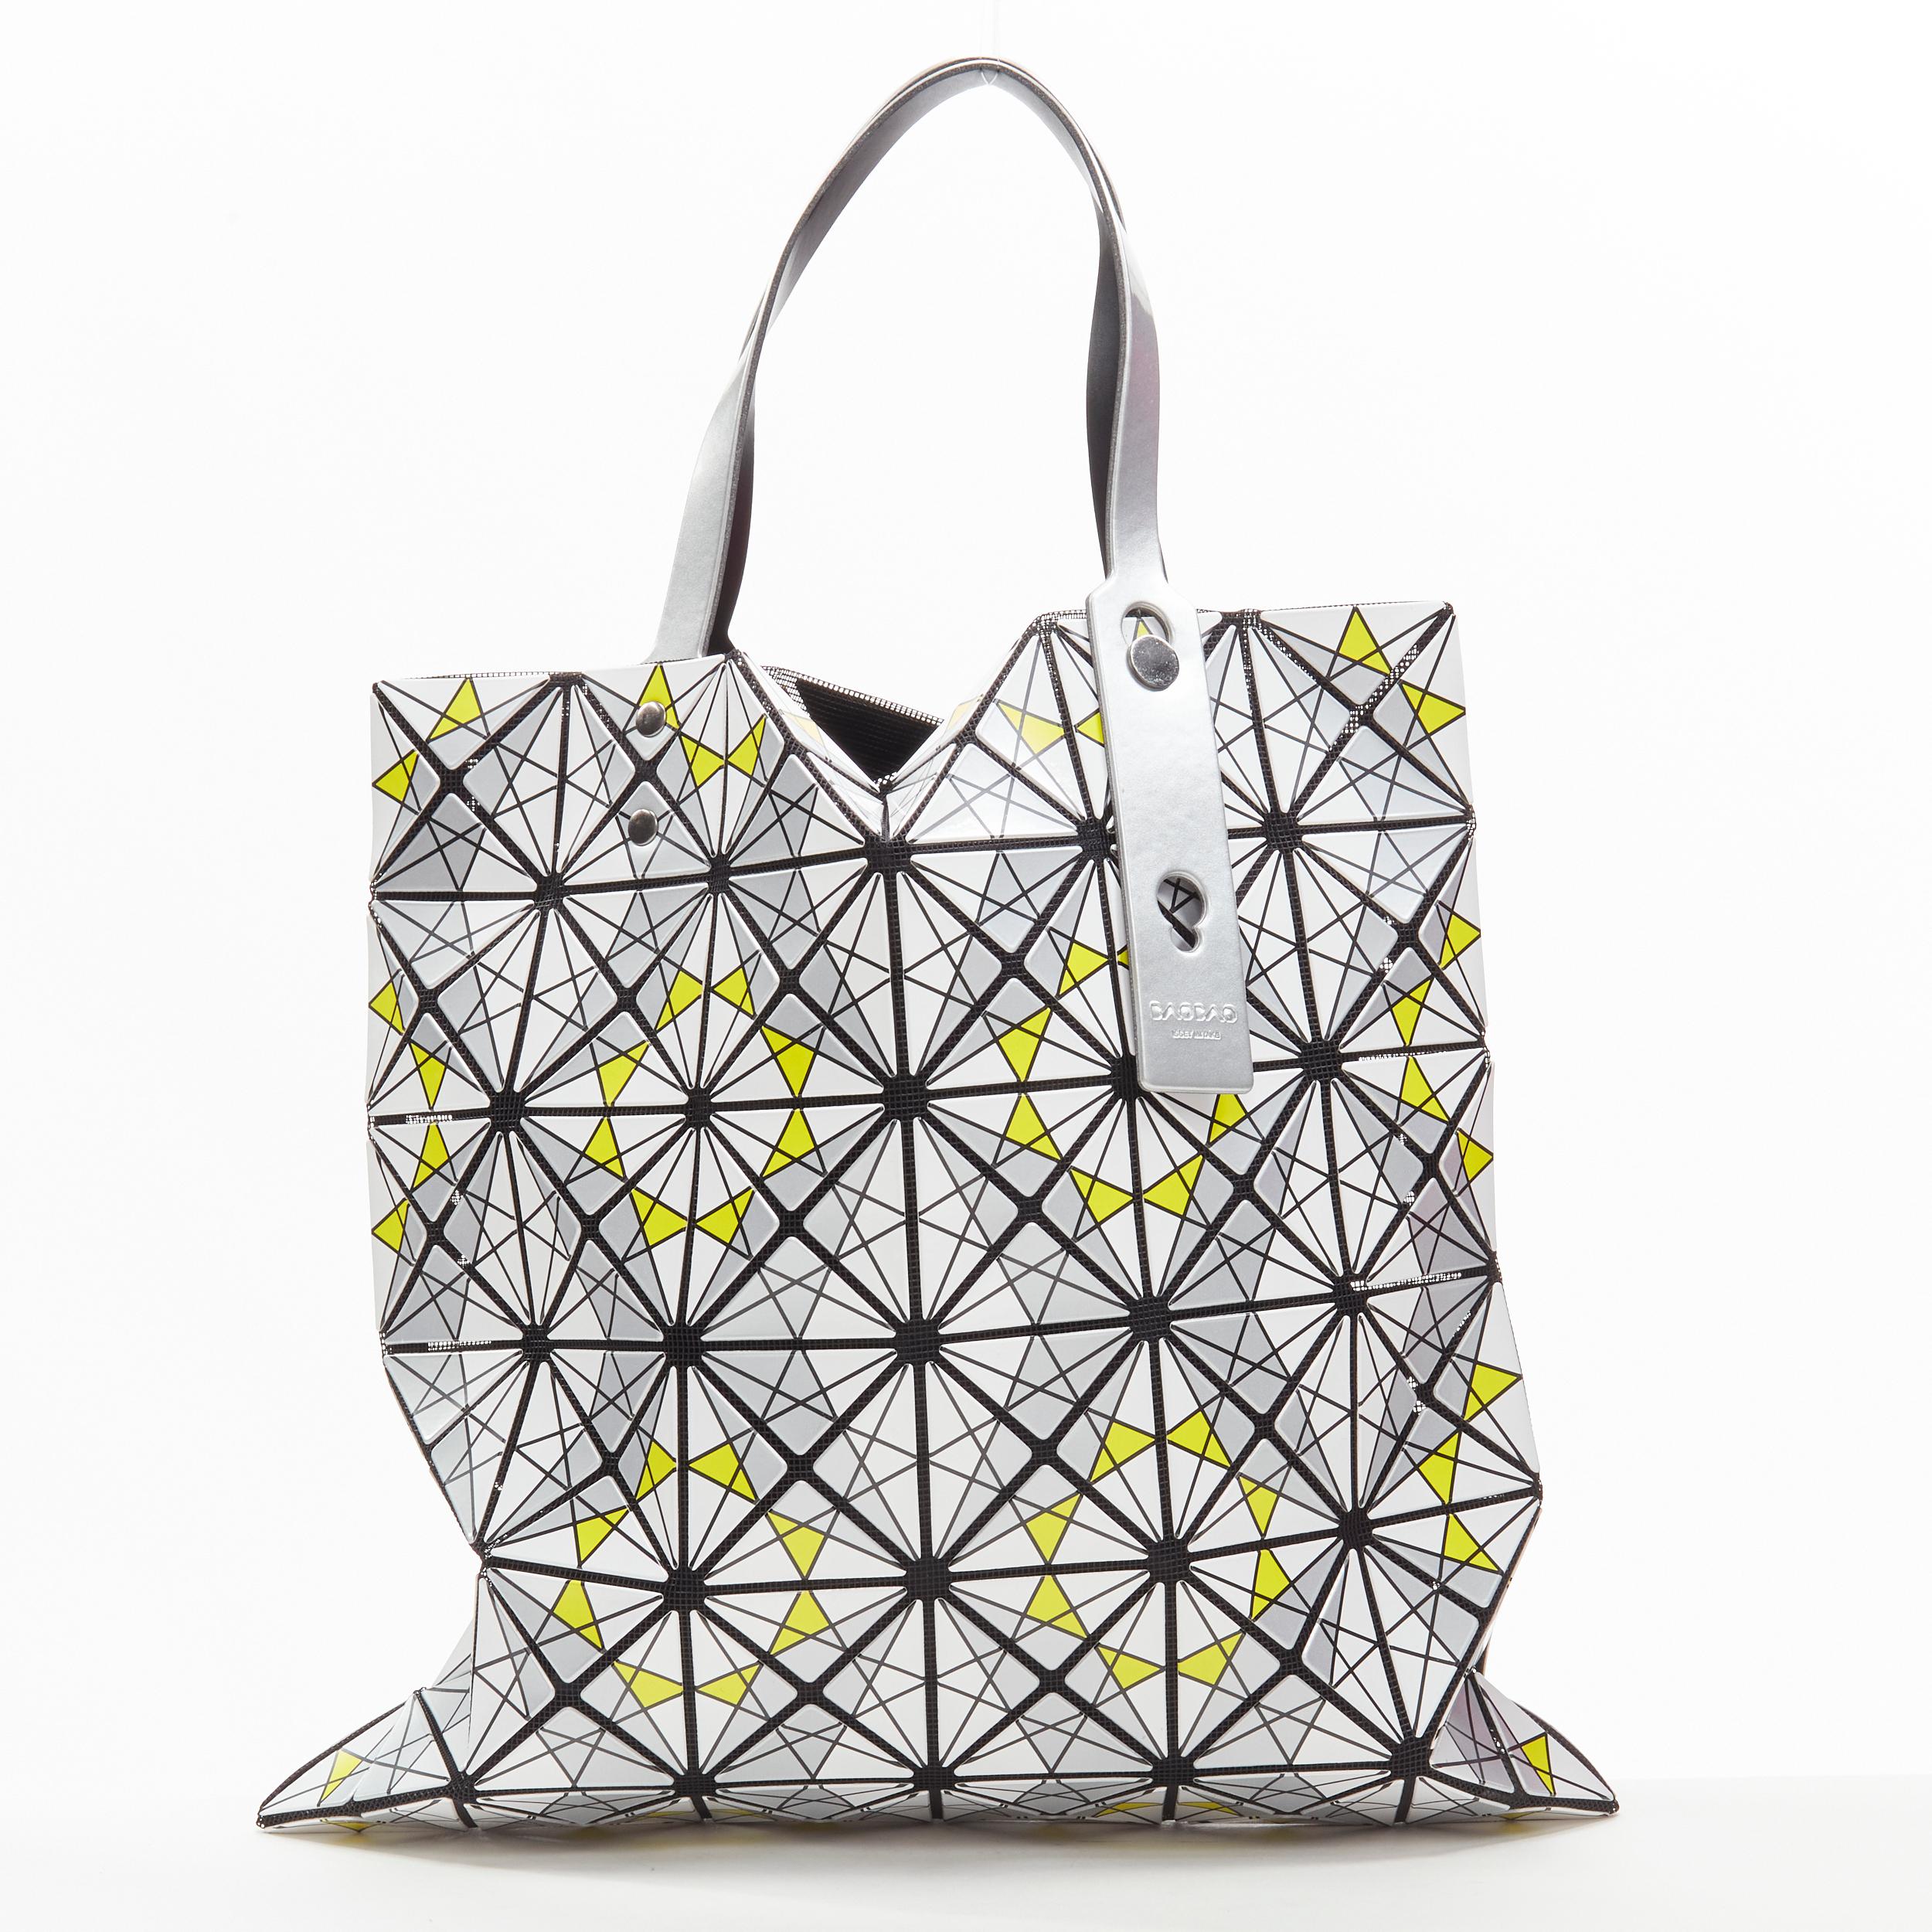 designer tote bag with geometric pattern